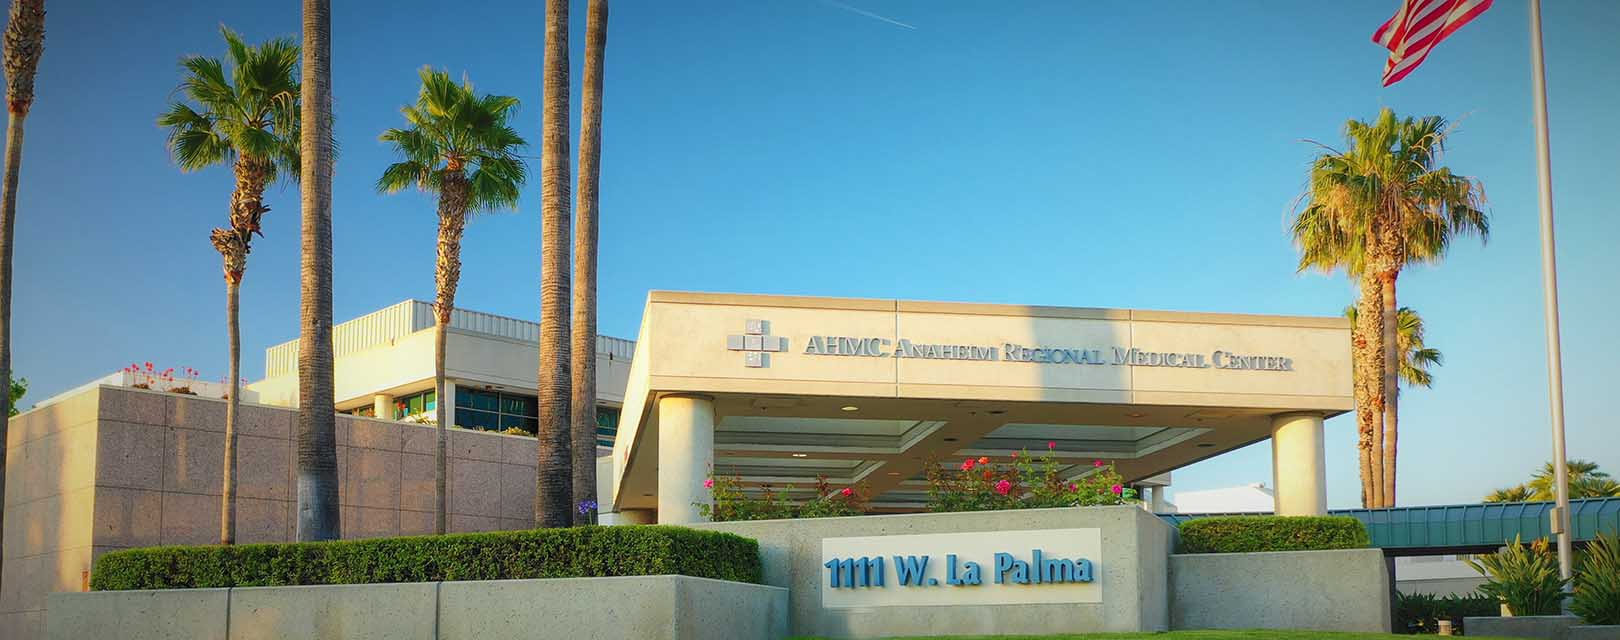 AHMC ANAHEIM REGIONAL MEDICAL CENTER
1111 W. LA PALMA